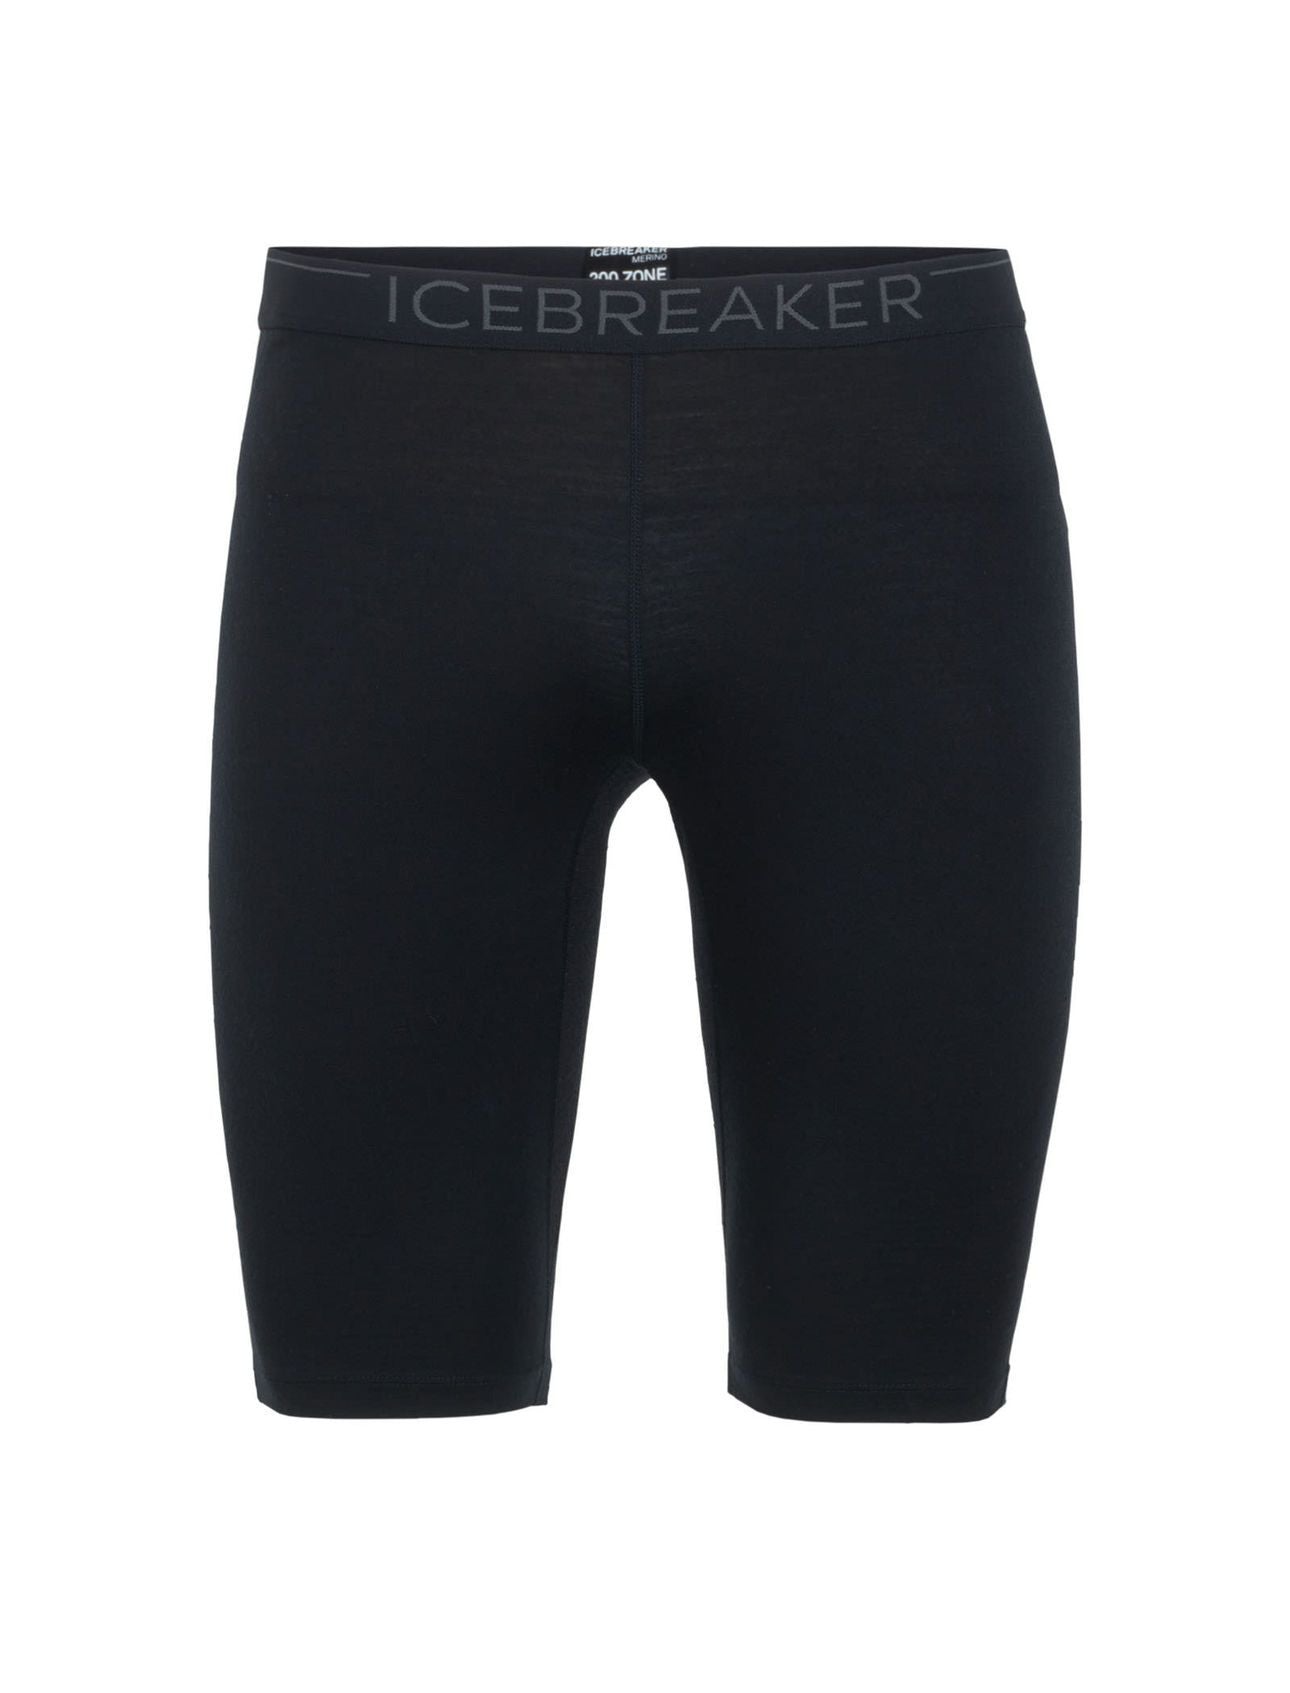 Icebreaker 200 Zone Mens Shorts 2019